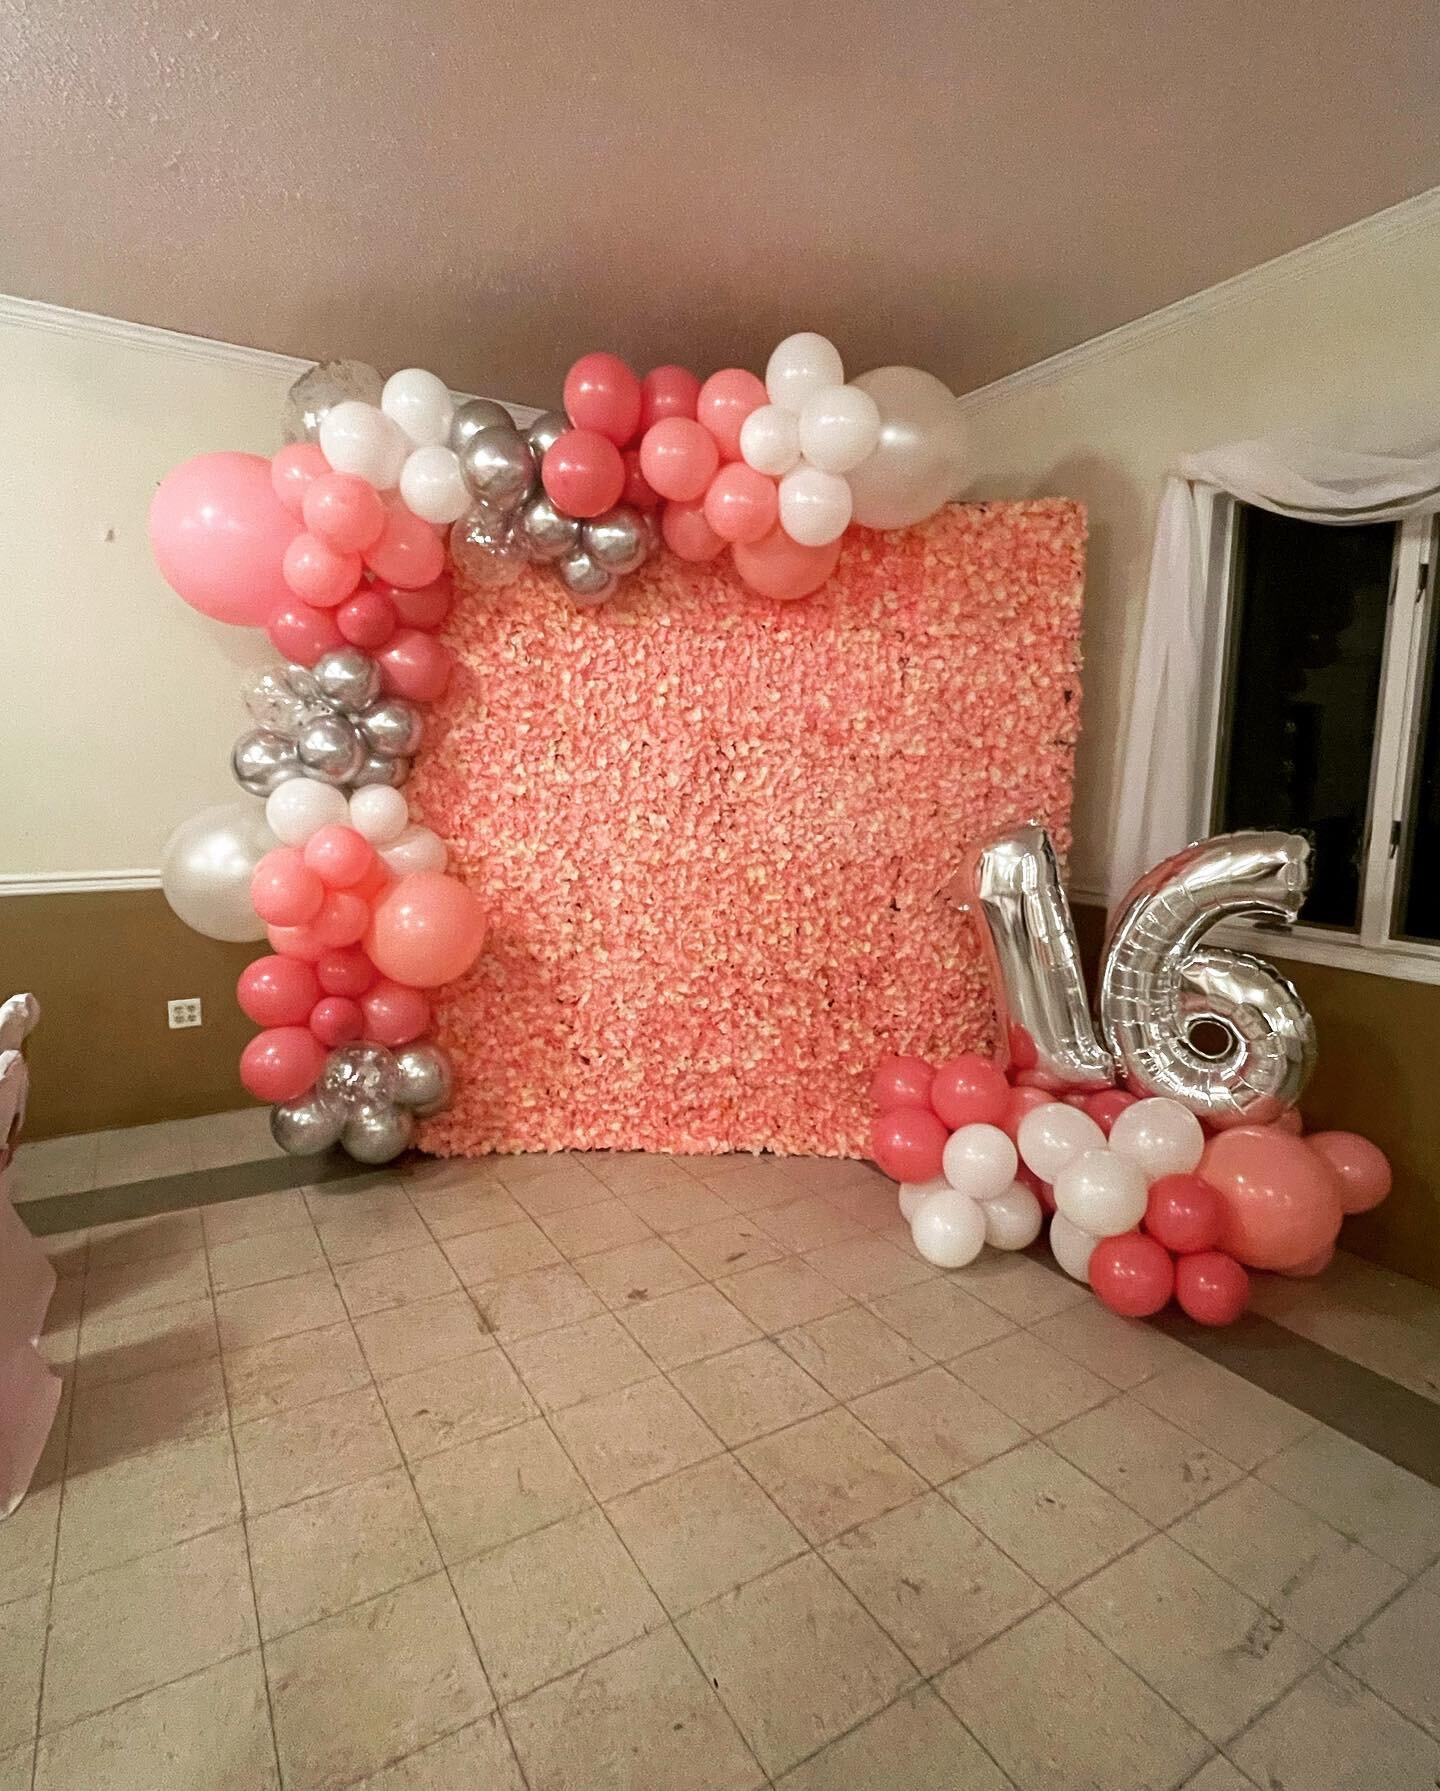 Happy Sweet 16!! 

#balloons #decor #photowall #flowerwall #backdrop #sweet16 #hapoybirthday #party #16 #balloongarland #balloonarch #heart2table #danburyct